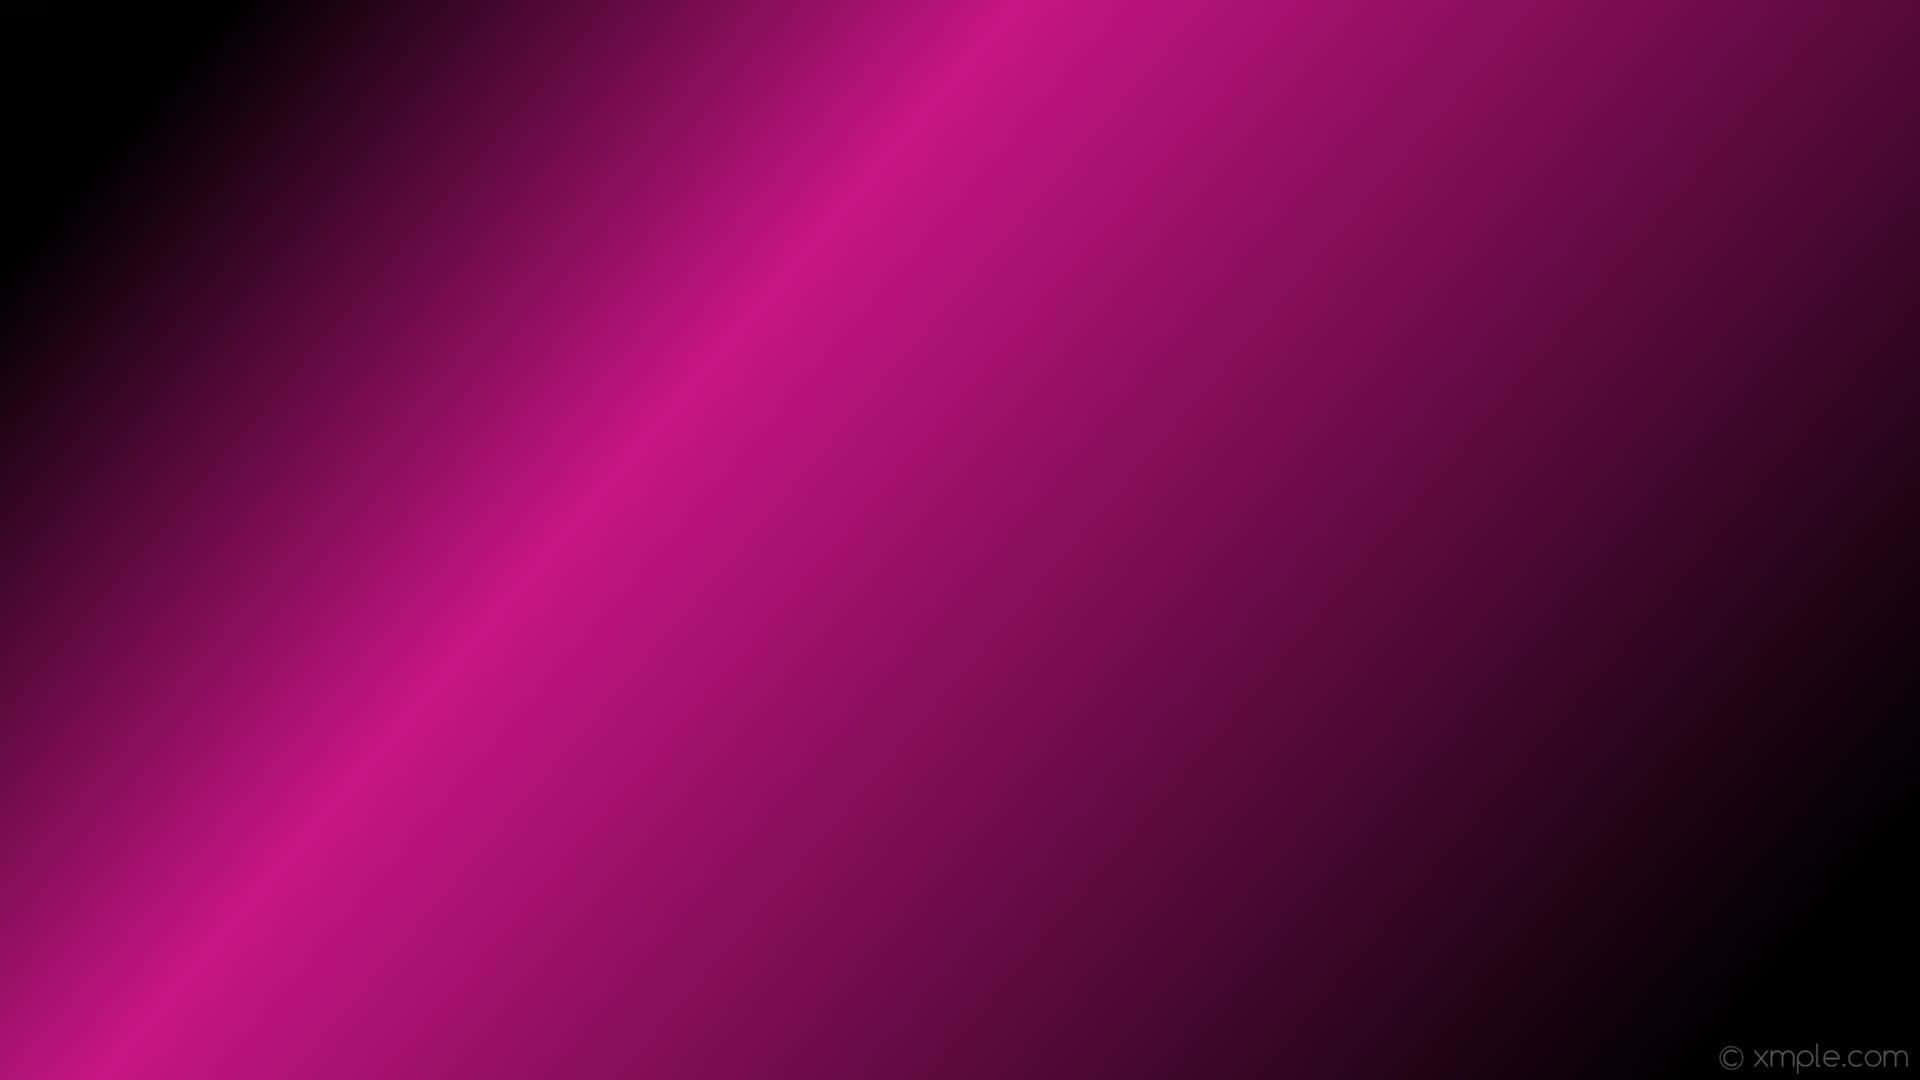 100+] Pink Gradient Backgrounds